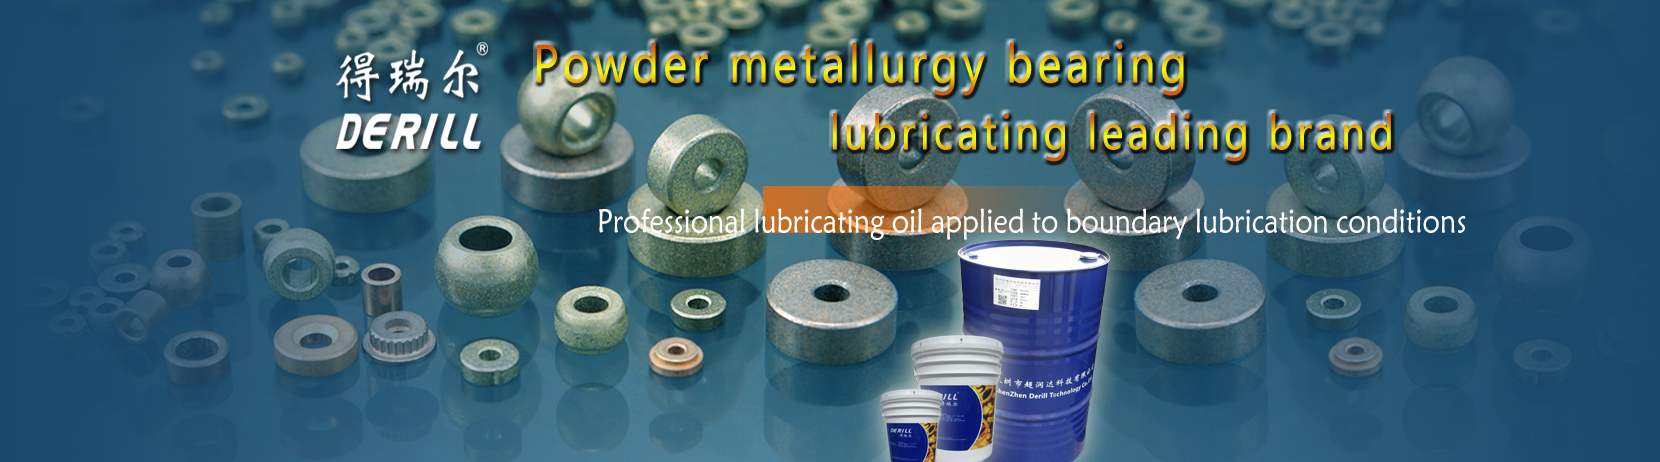 Powder metallurgy bearing lubricants